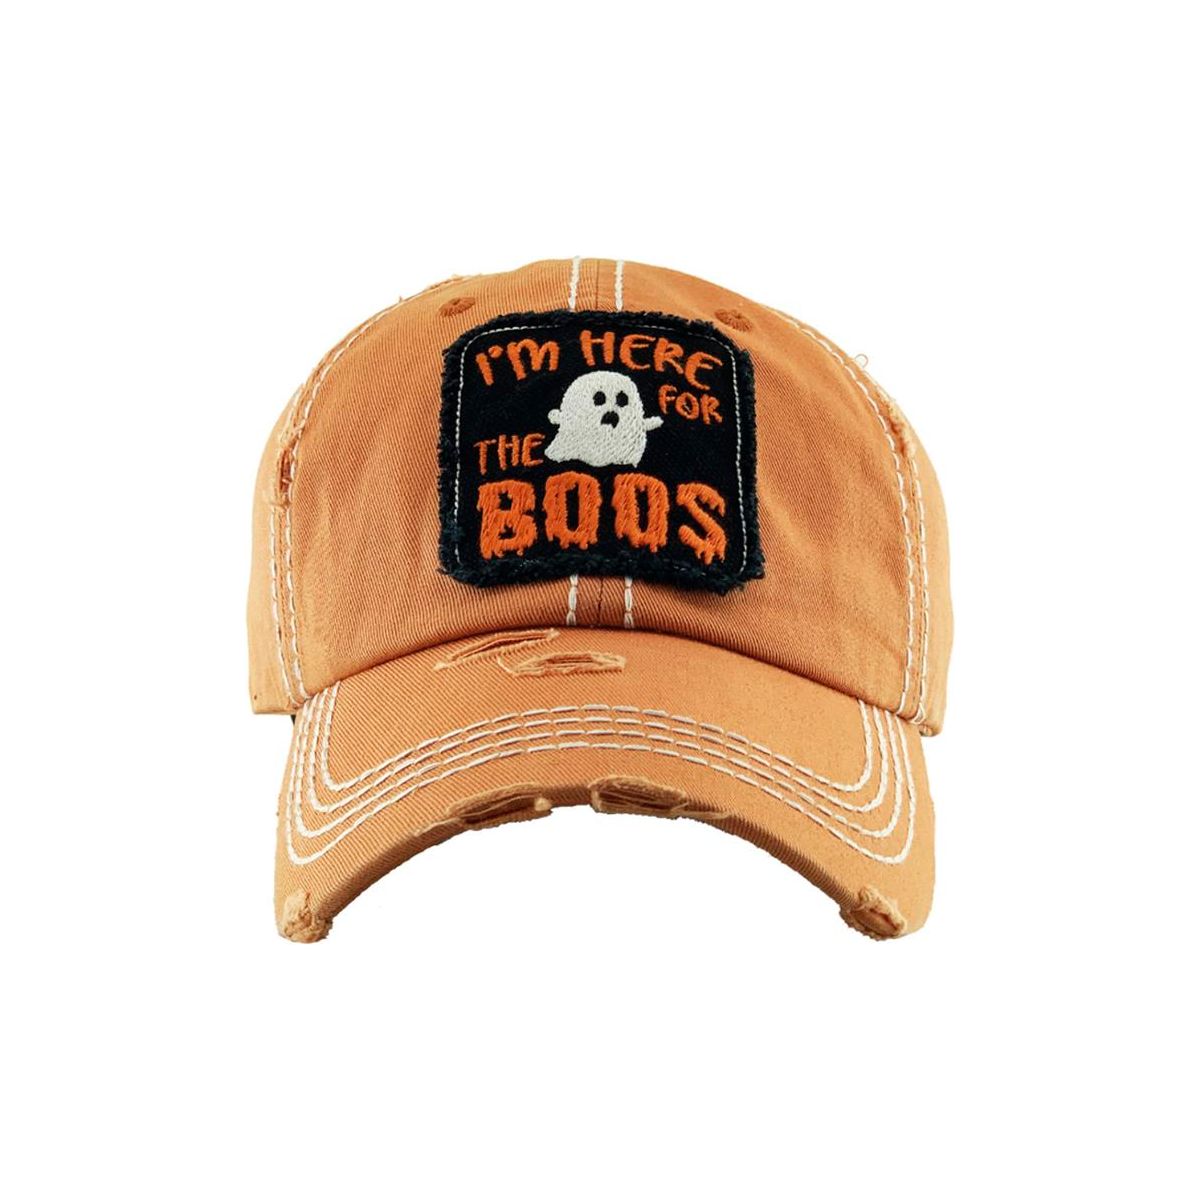 Here for the Boos Vintage Baseball Cap - Desert Dreams Boutique